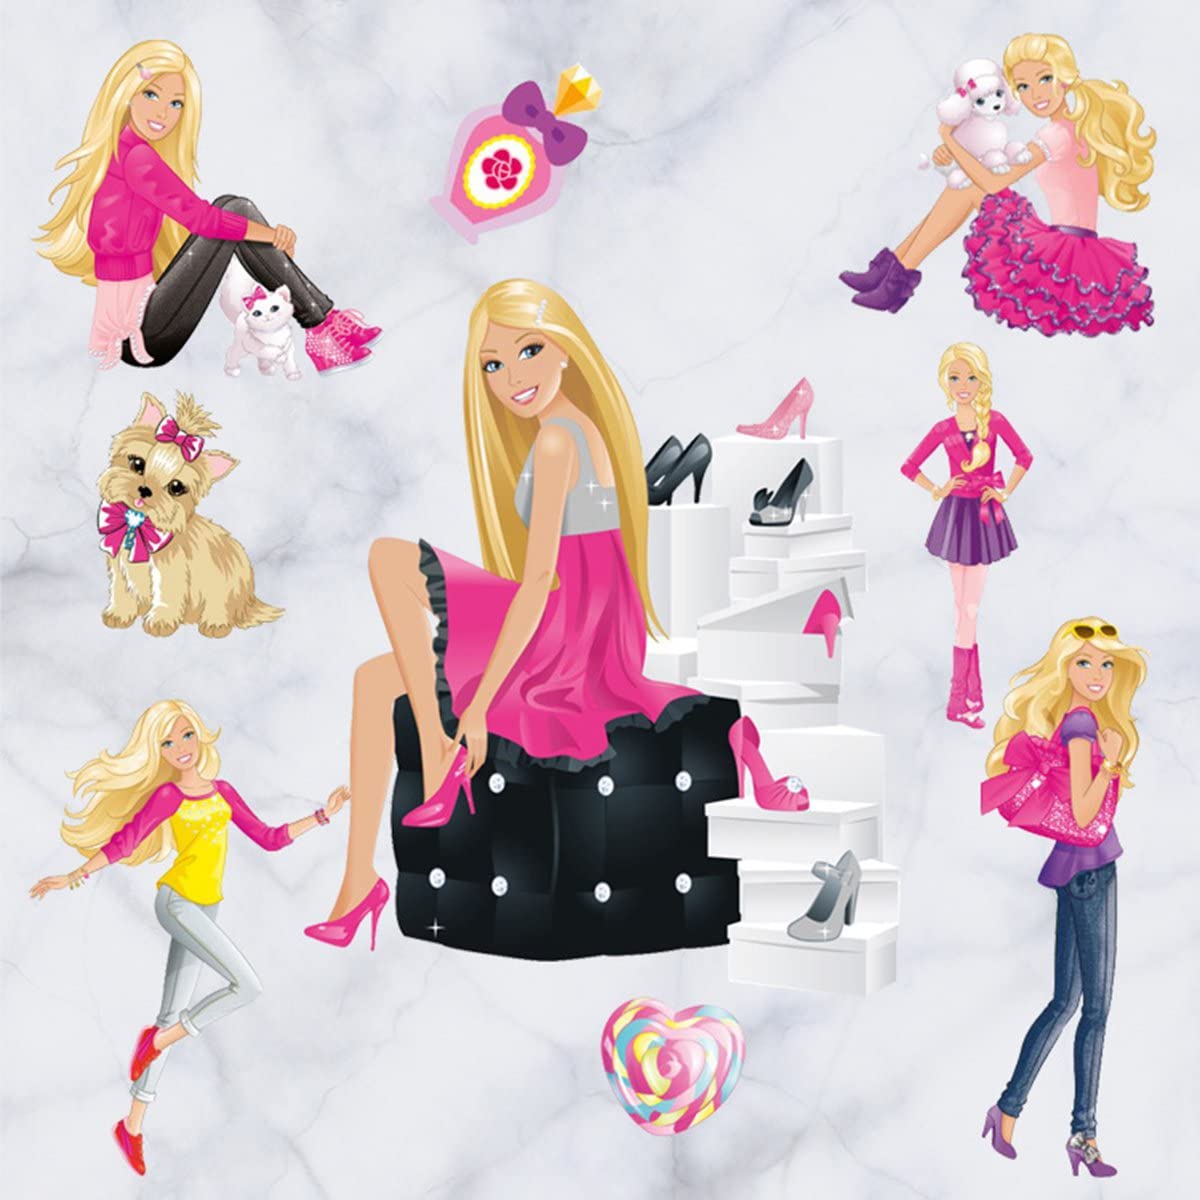 Janeyer [Newest Version] Home Decorative 3D Effect Cute Barbie Girls Mural Removable Wall Sticker Cartoon Kids Nursery Wall Art Decal Wallpaper Black Barbie: Home & Kitchen